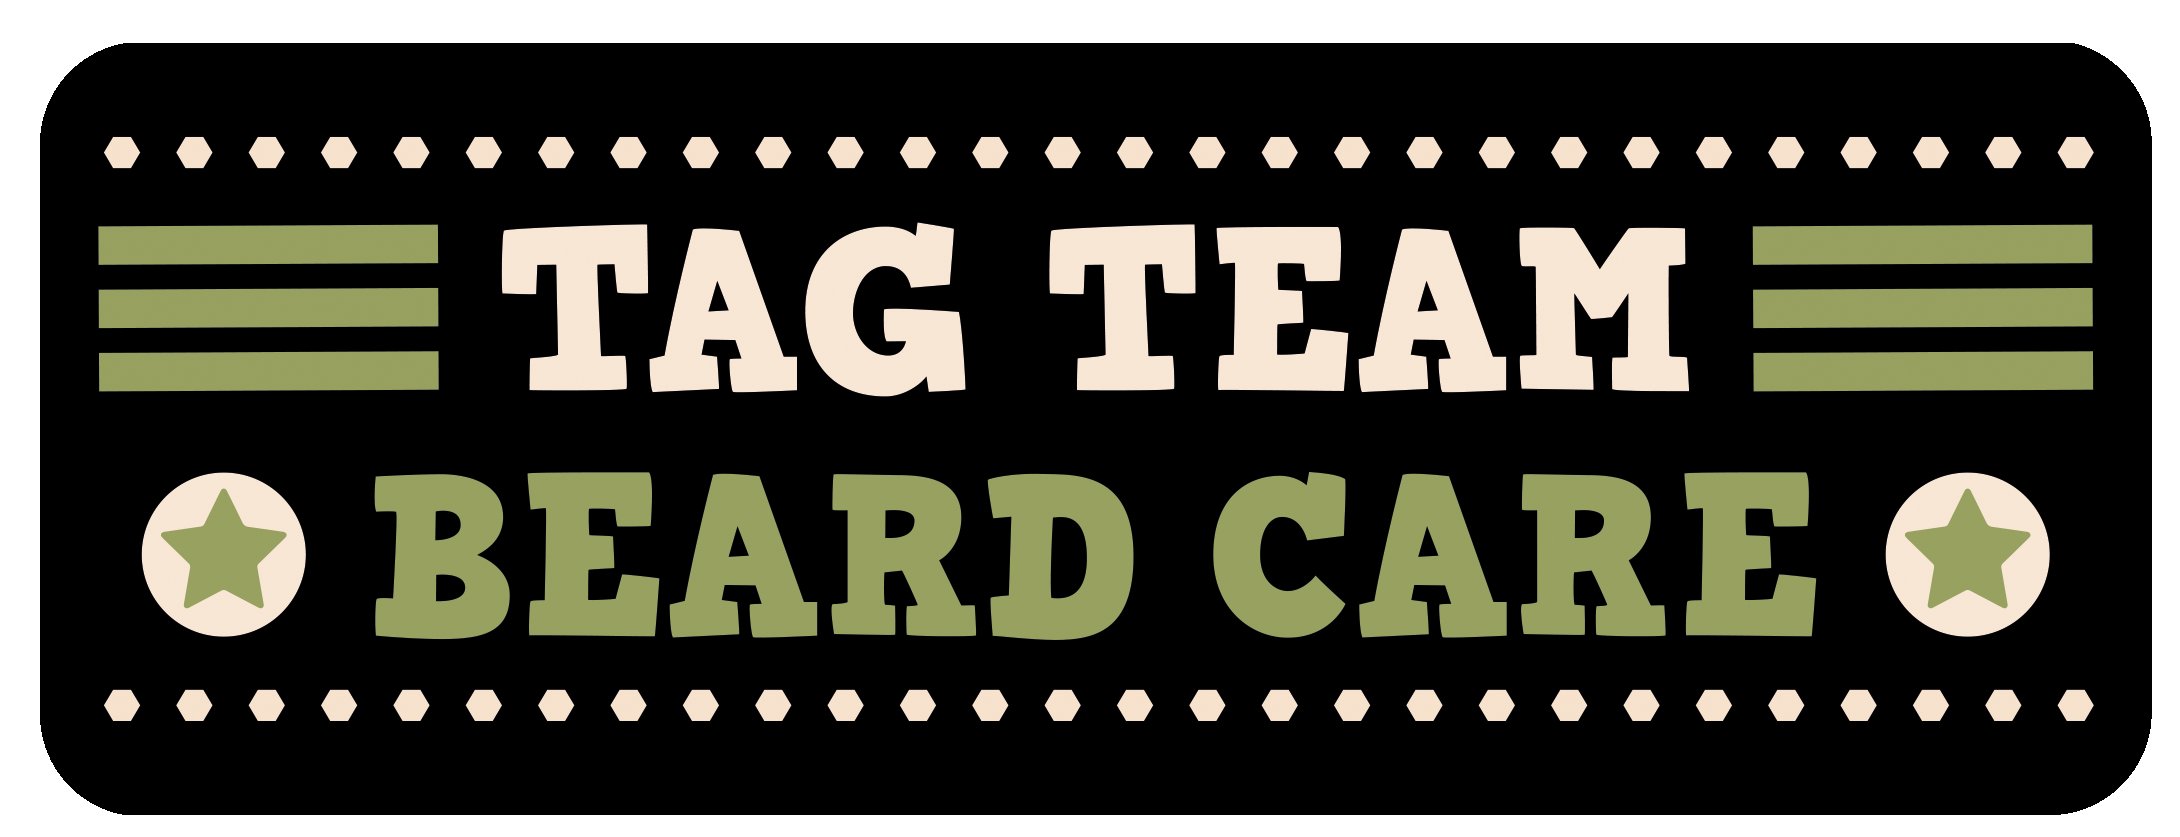 Tag Team Beard Care